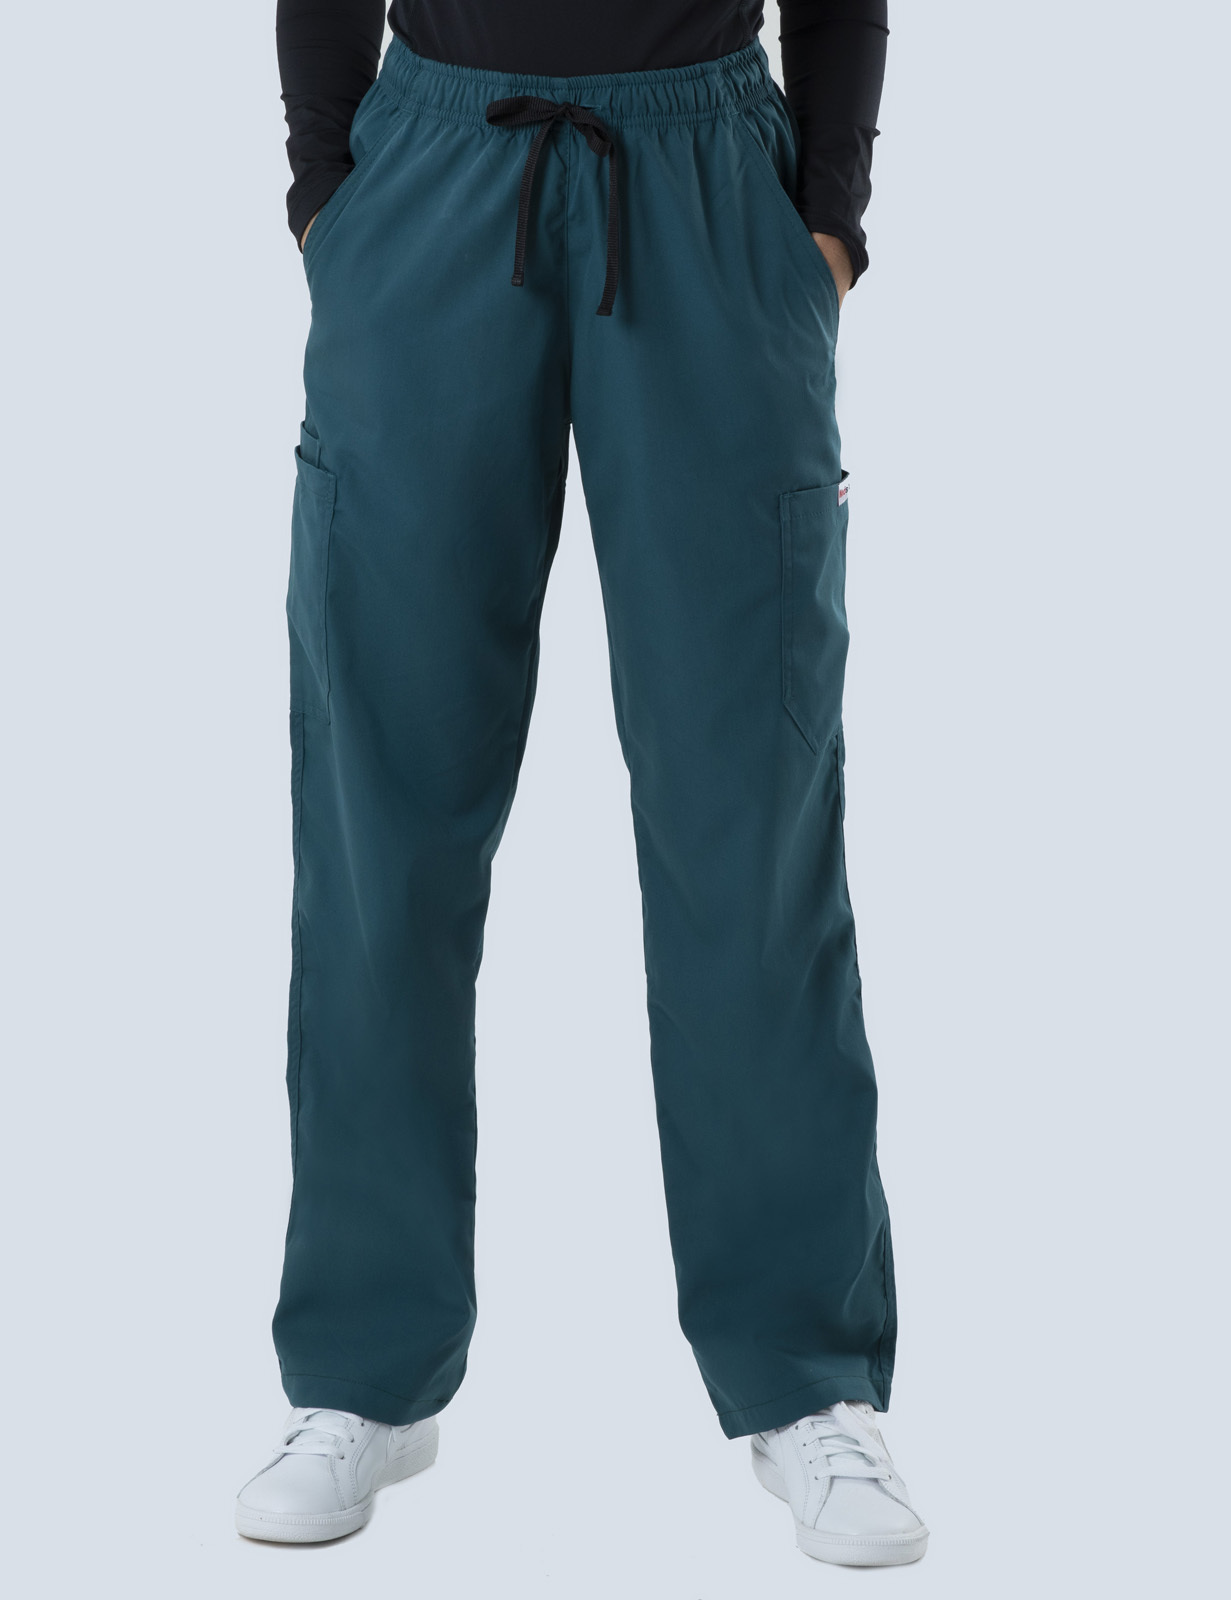 Biloela Hospital Healthcare Department Uniform Set Bundle (Women's Fit Solid Top and Cargo pants in Caribbean incl Logos)